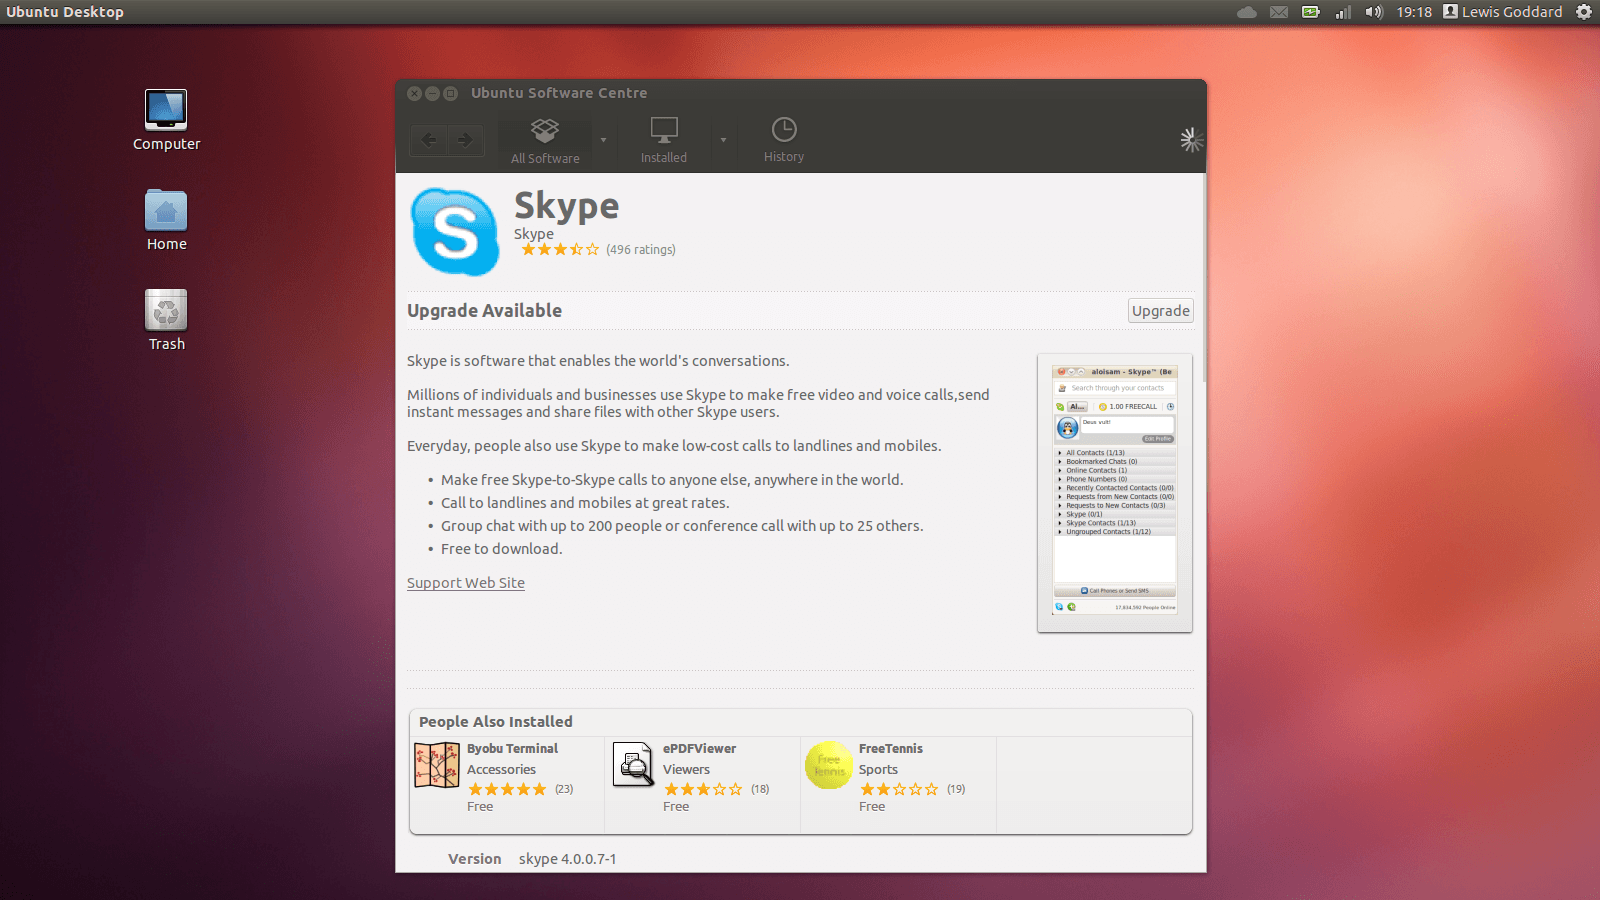 Upgrade Skype in the Ubuntu Software Centre